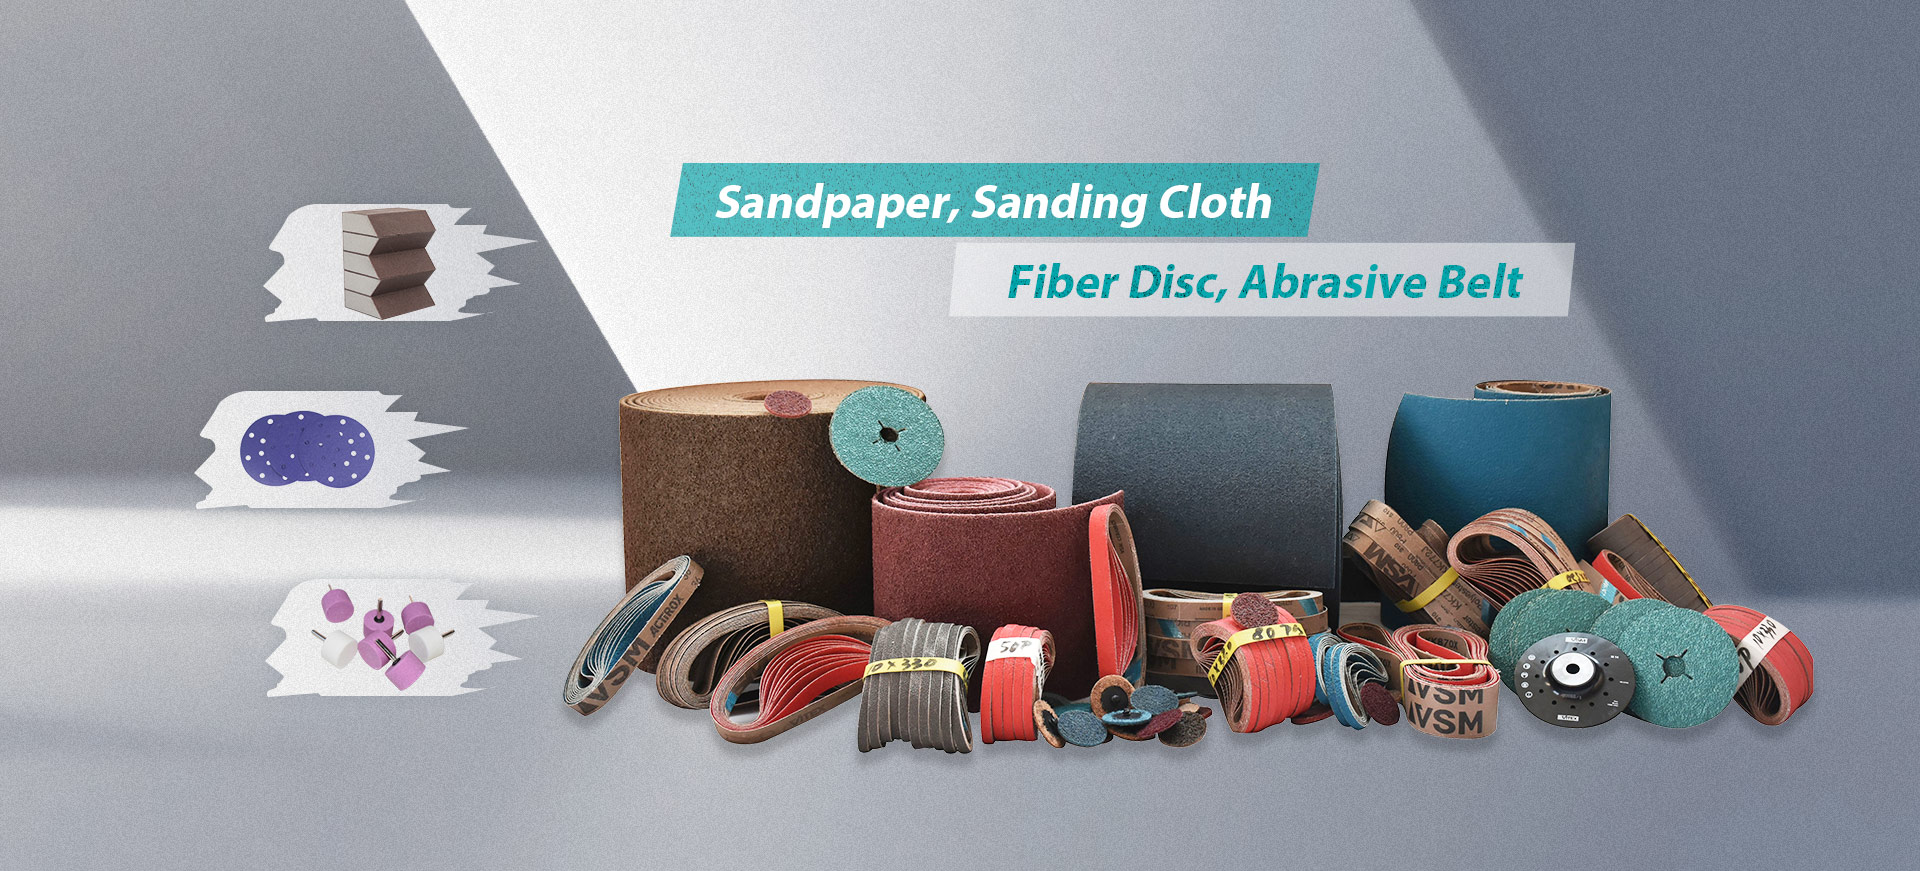 Sandpaper, Sanding Cloth, Fiber Disc, Abrasive Belt